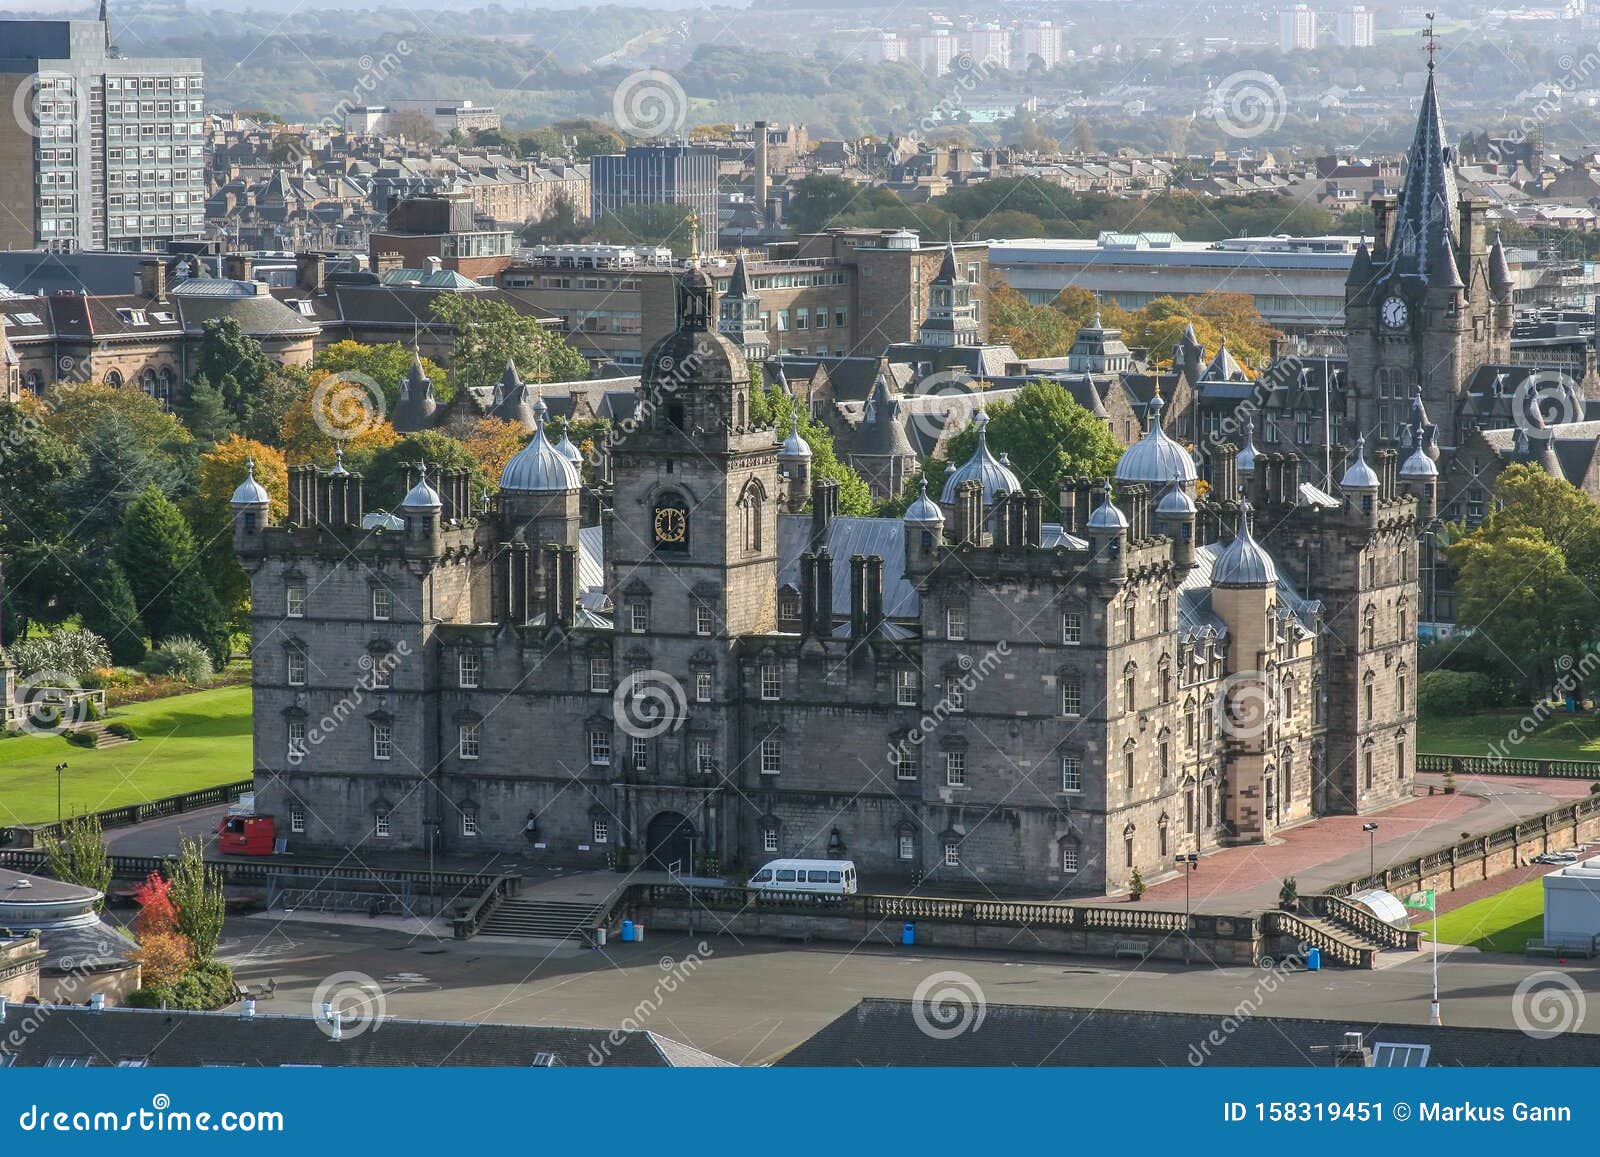 Edinburgh Capital City of Scotland Great Britain UK Stock Image - Image of  roof, nature: 158319451